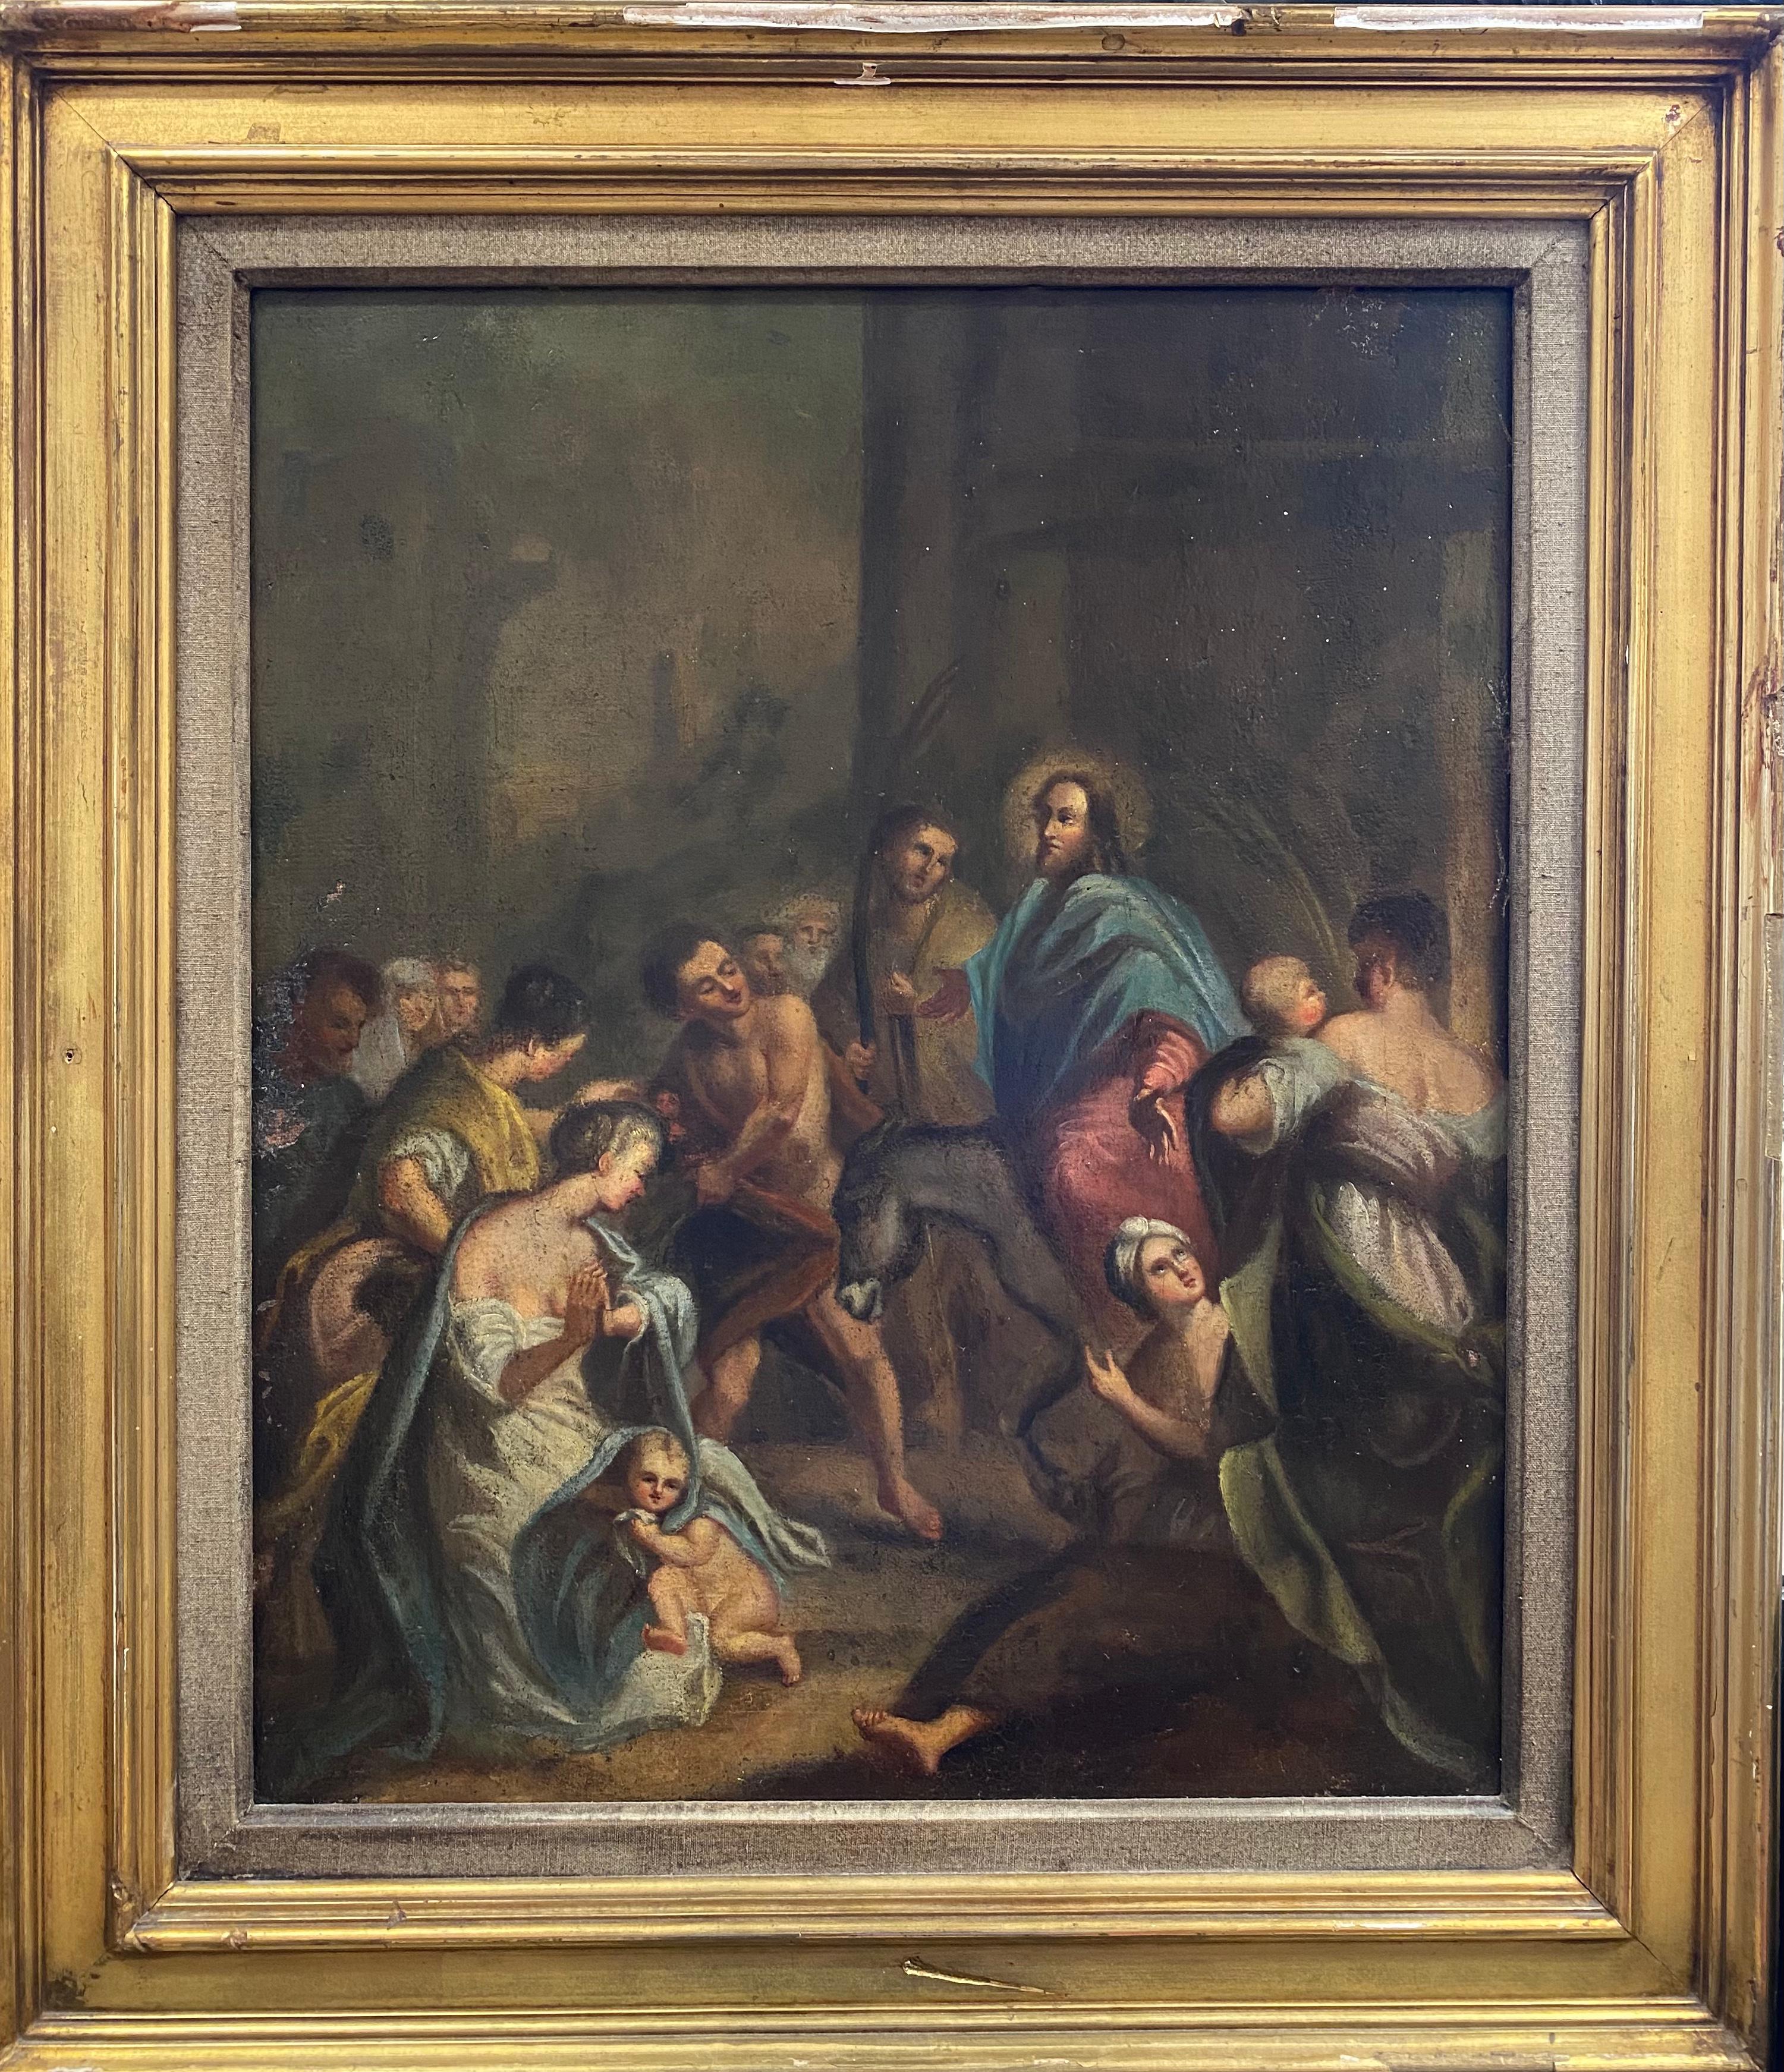 18th/19th Century School
'A scene of Christ entering Jerusalem'
Medium: oil on canvas, framed
Size of painting: 21.5